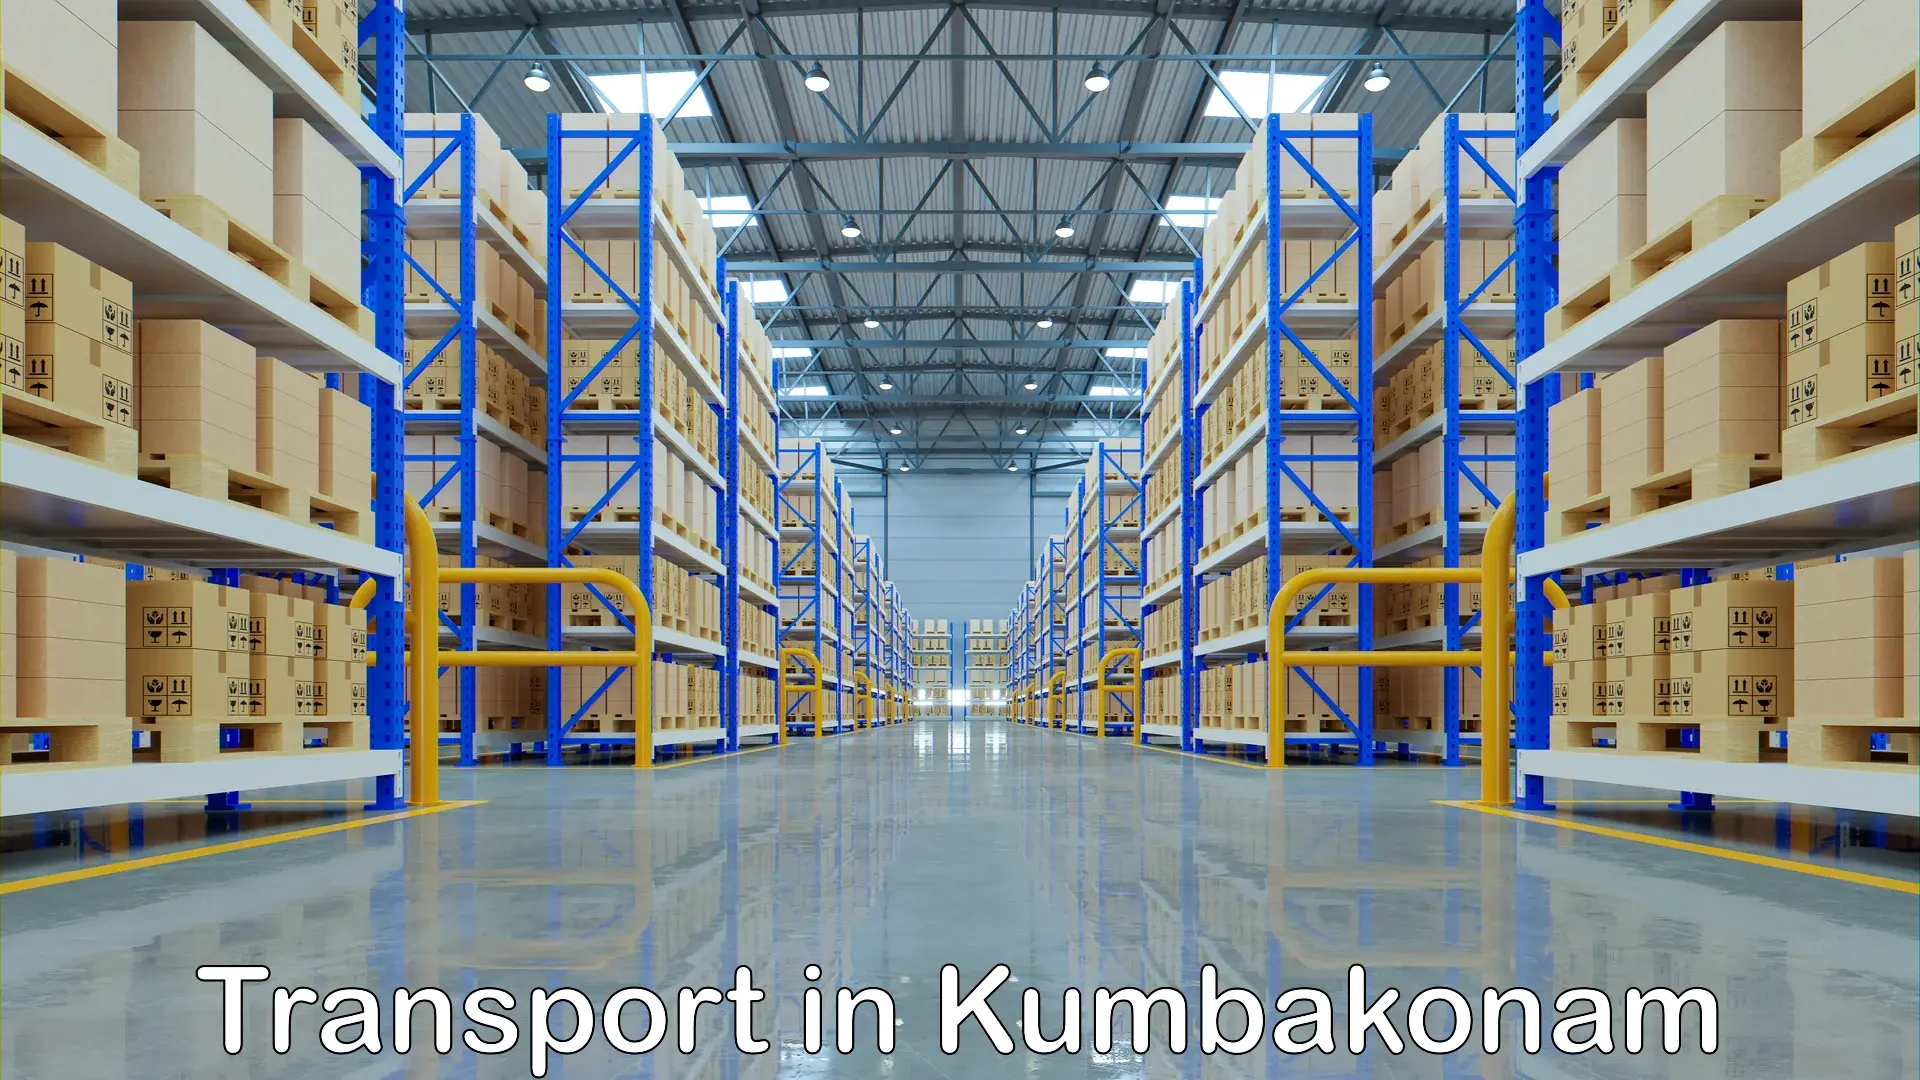 Express transport services in Kumbakonam